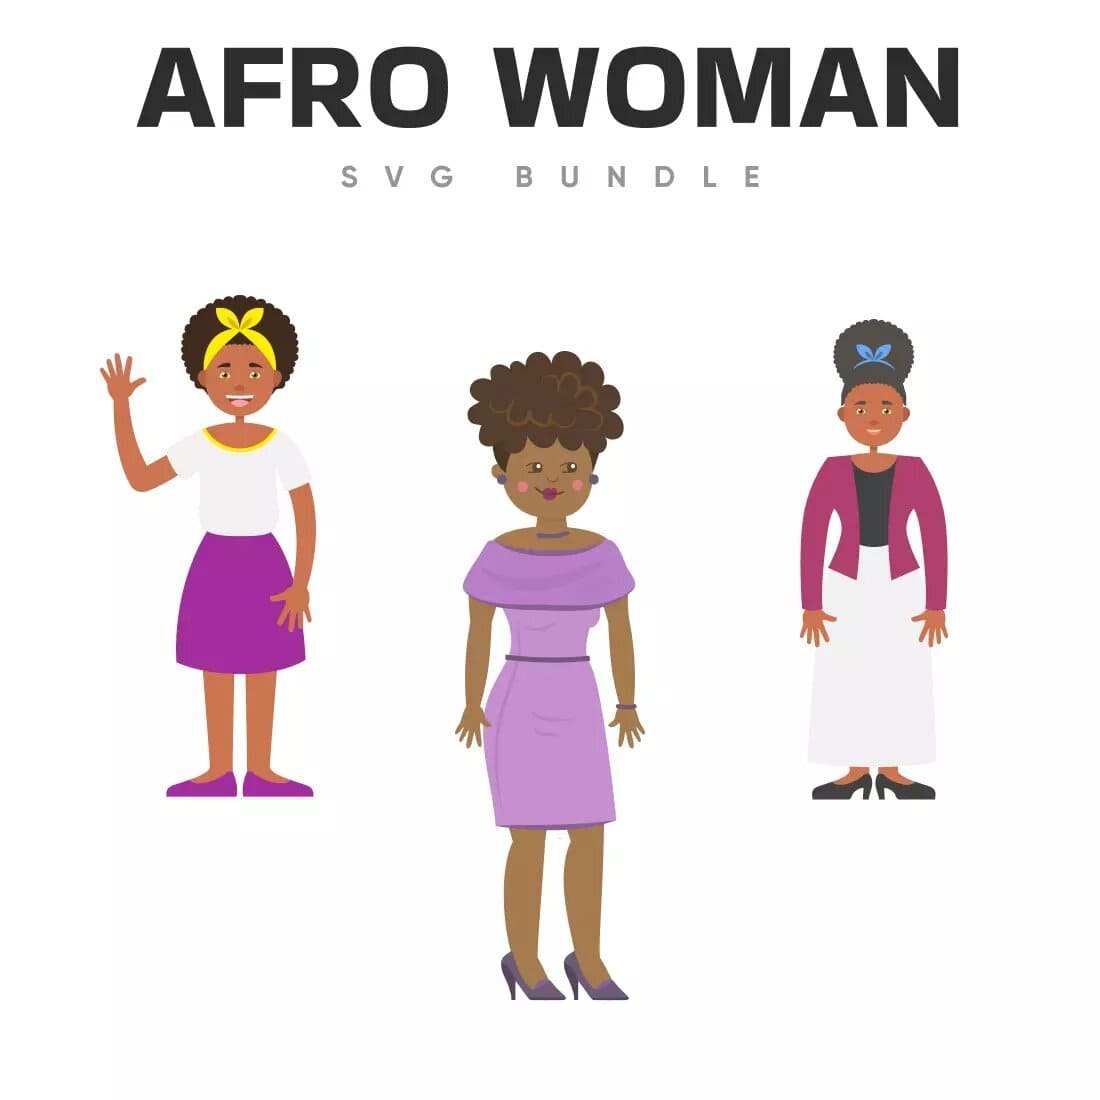 Afro Woman SVG Bundle Preview 4.